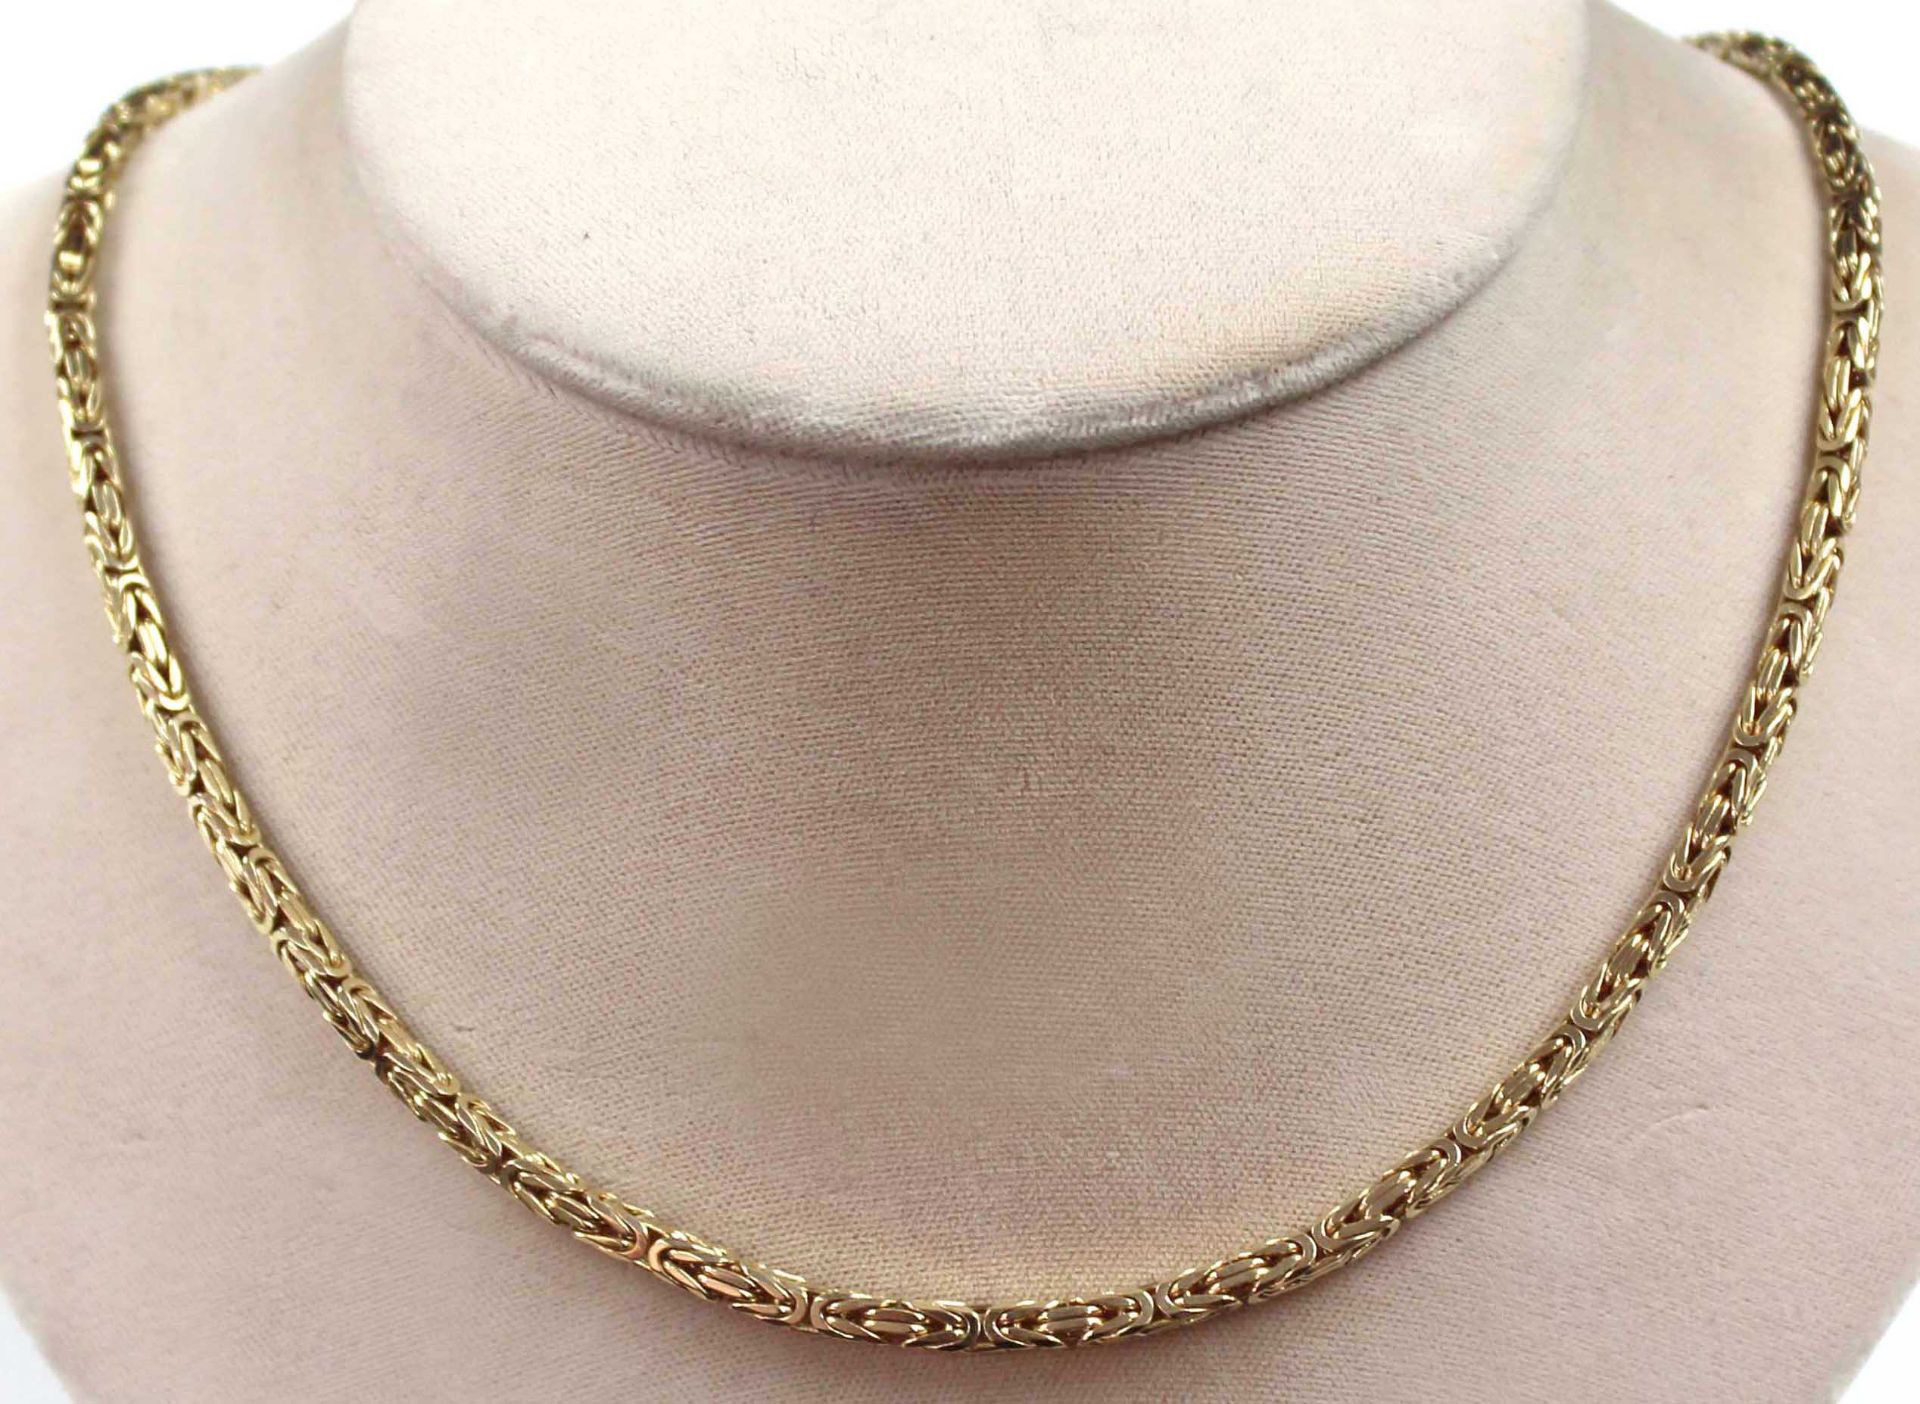 Königskette Gelb Gold 585. 52,6 Gramm. Circa 53 cm lang.Necklace yellow gold 585. 52,6 grams.